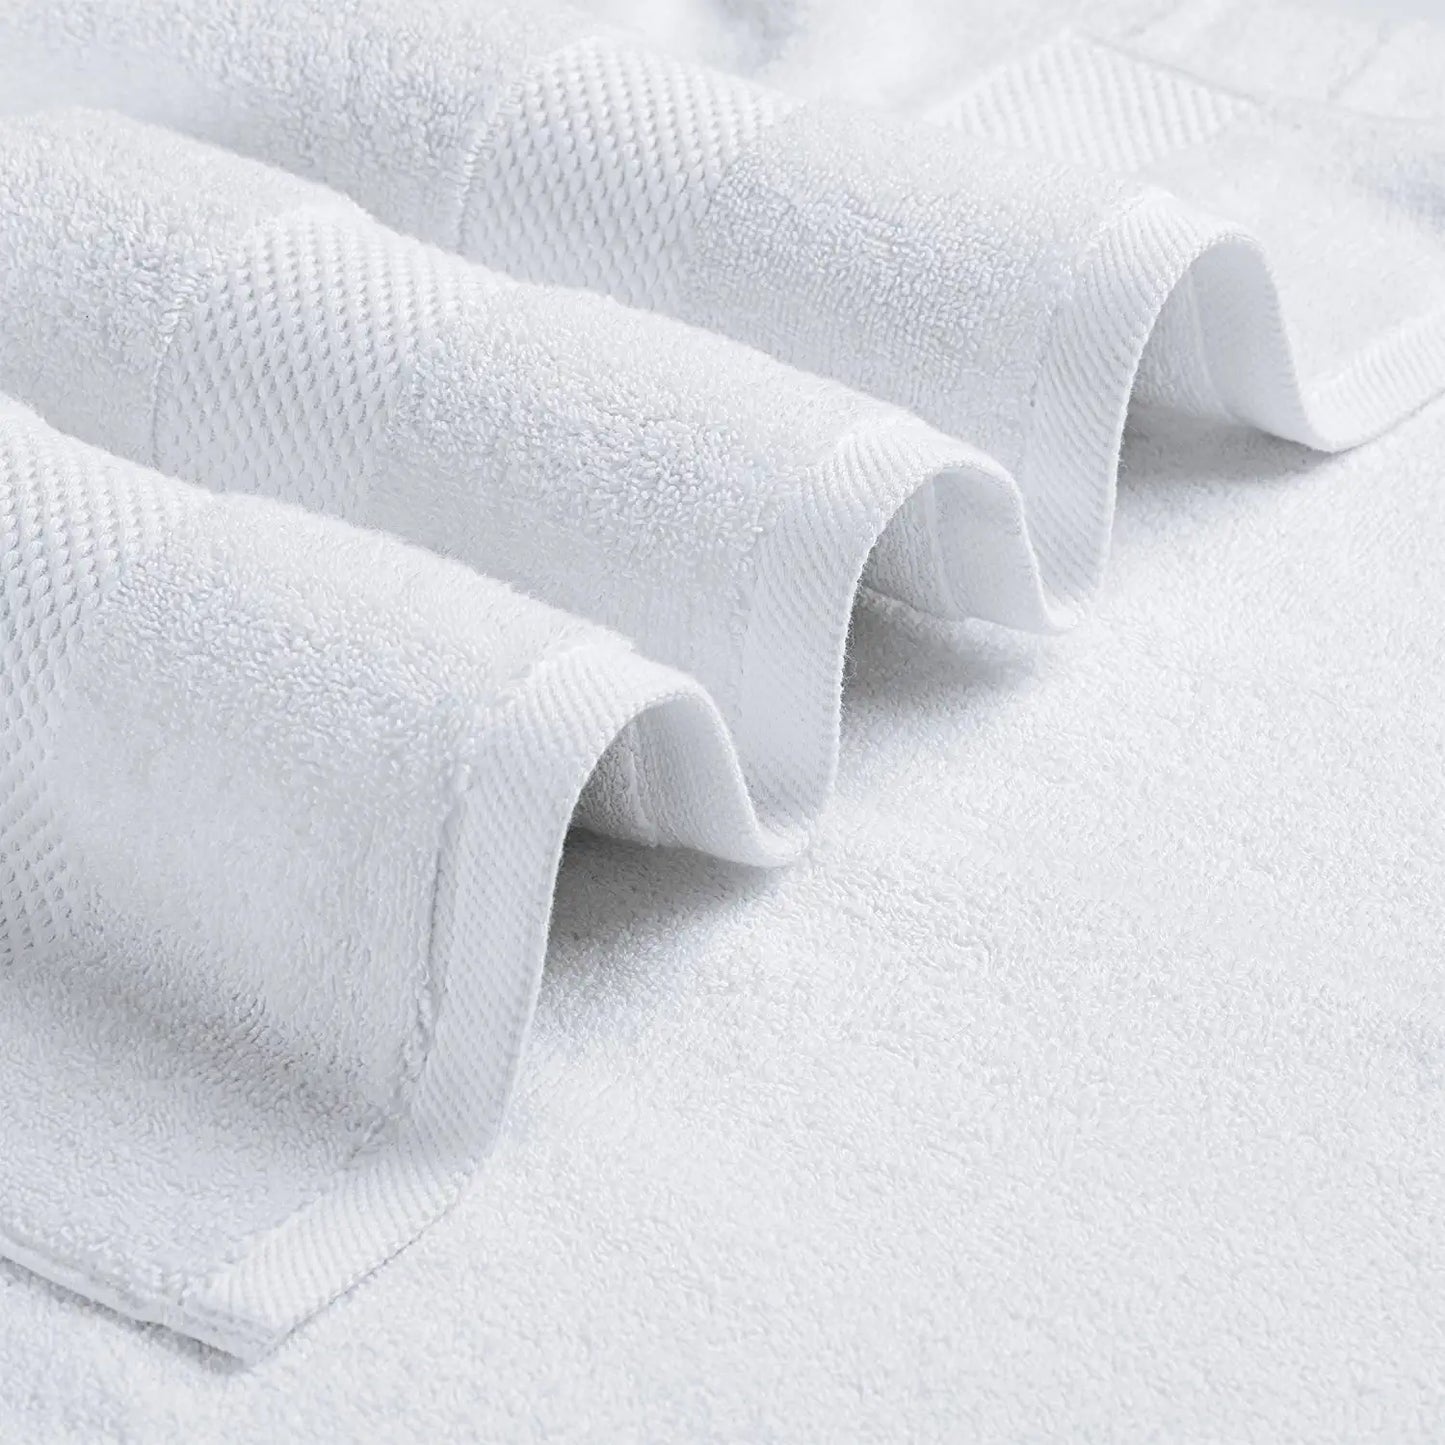 Spa Collection White Bath Towel